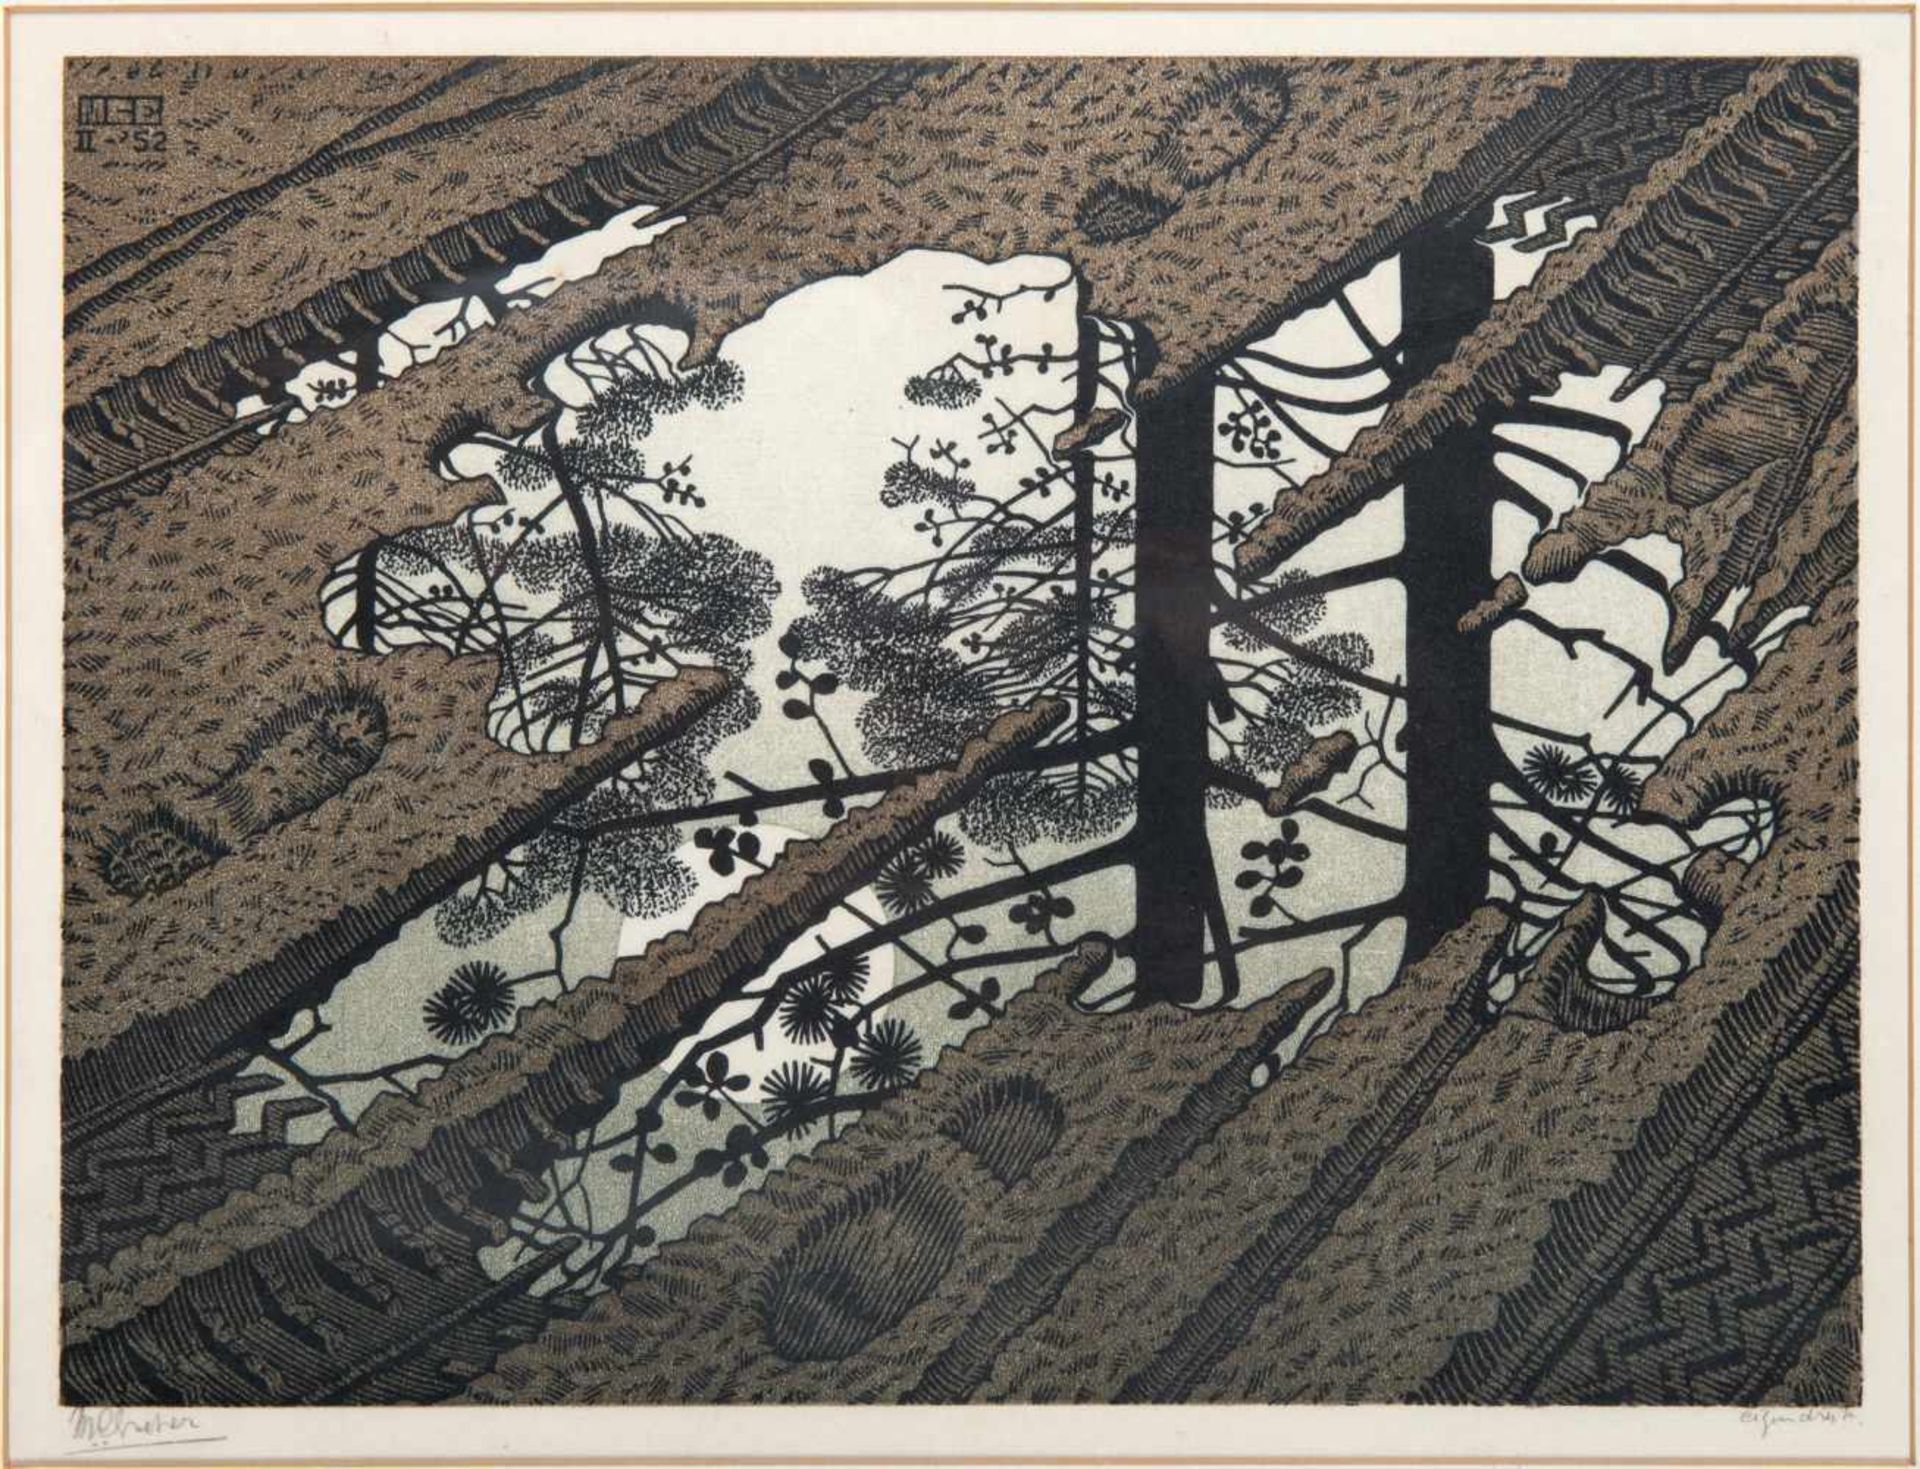 Maurits Cornelis Escher (1898-1972) 'Modderplas', gesigneerd l.o., 'eigen druk' r.o., februari 1952, - Image 8 of 8